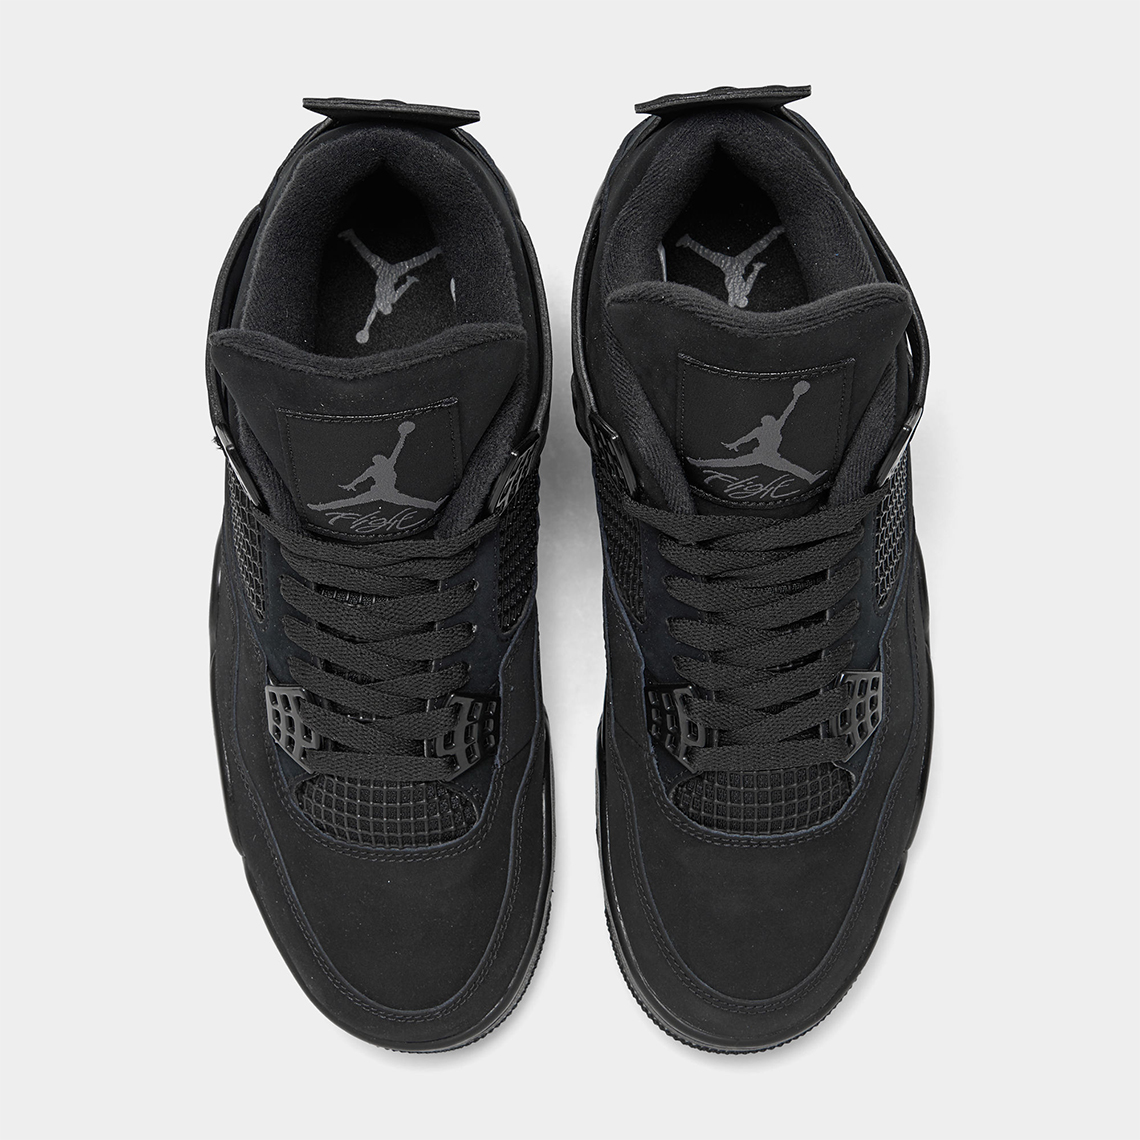 First Look: Air Jordan 4 Black Cat 2020 Retro